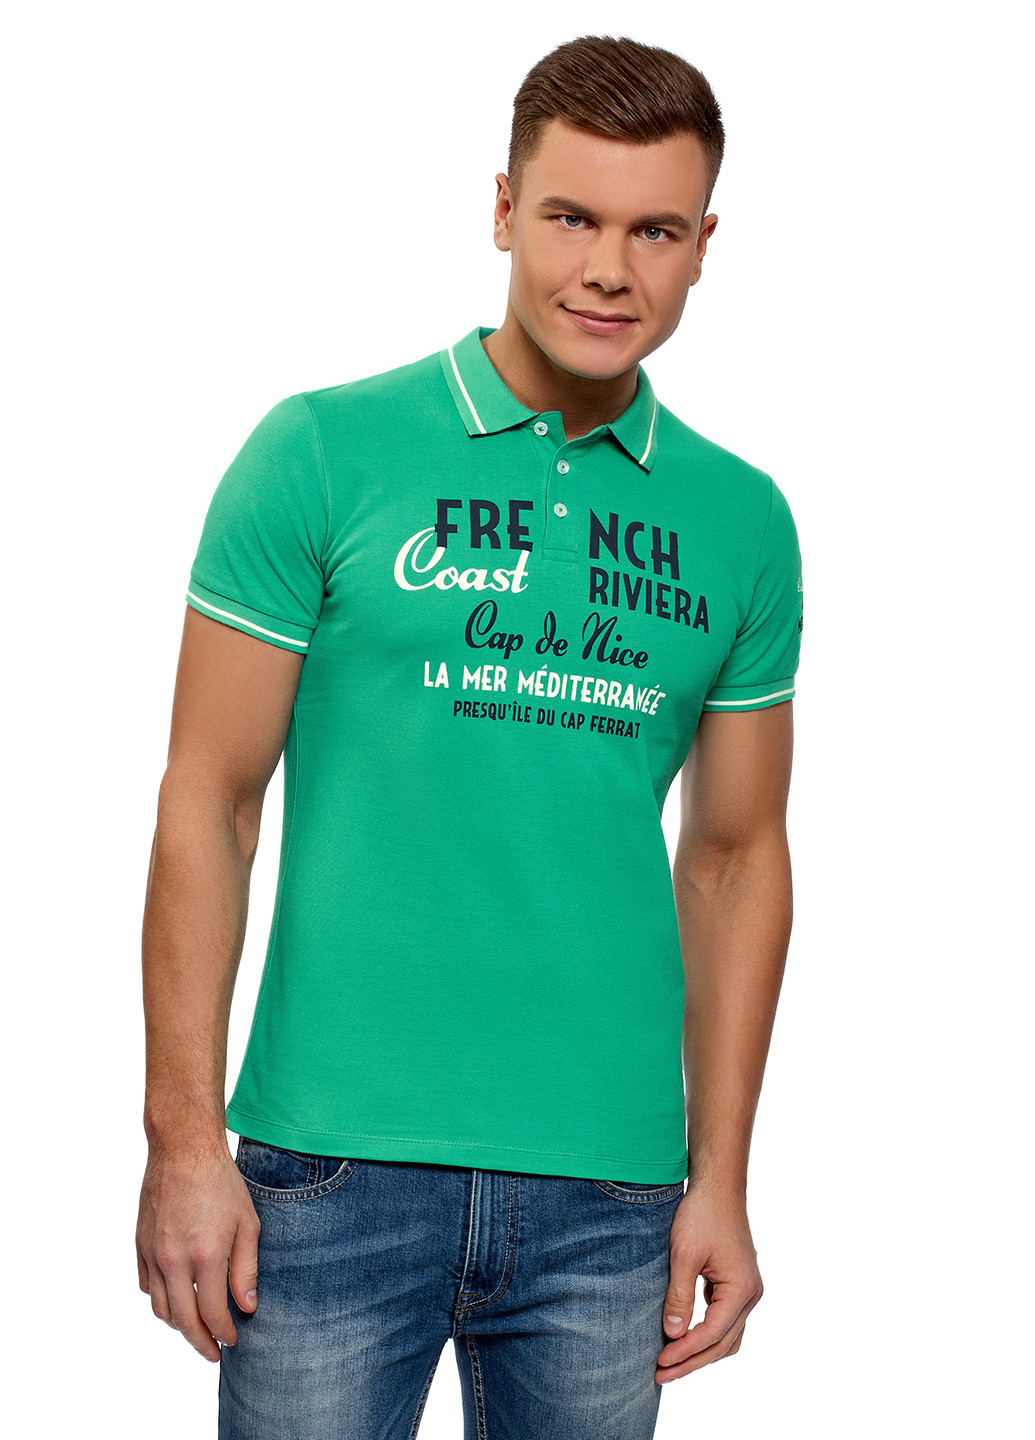 Зеленая футболка-поло для мужчин Oodji с надписью